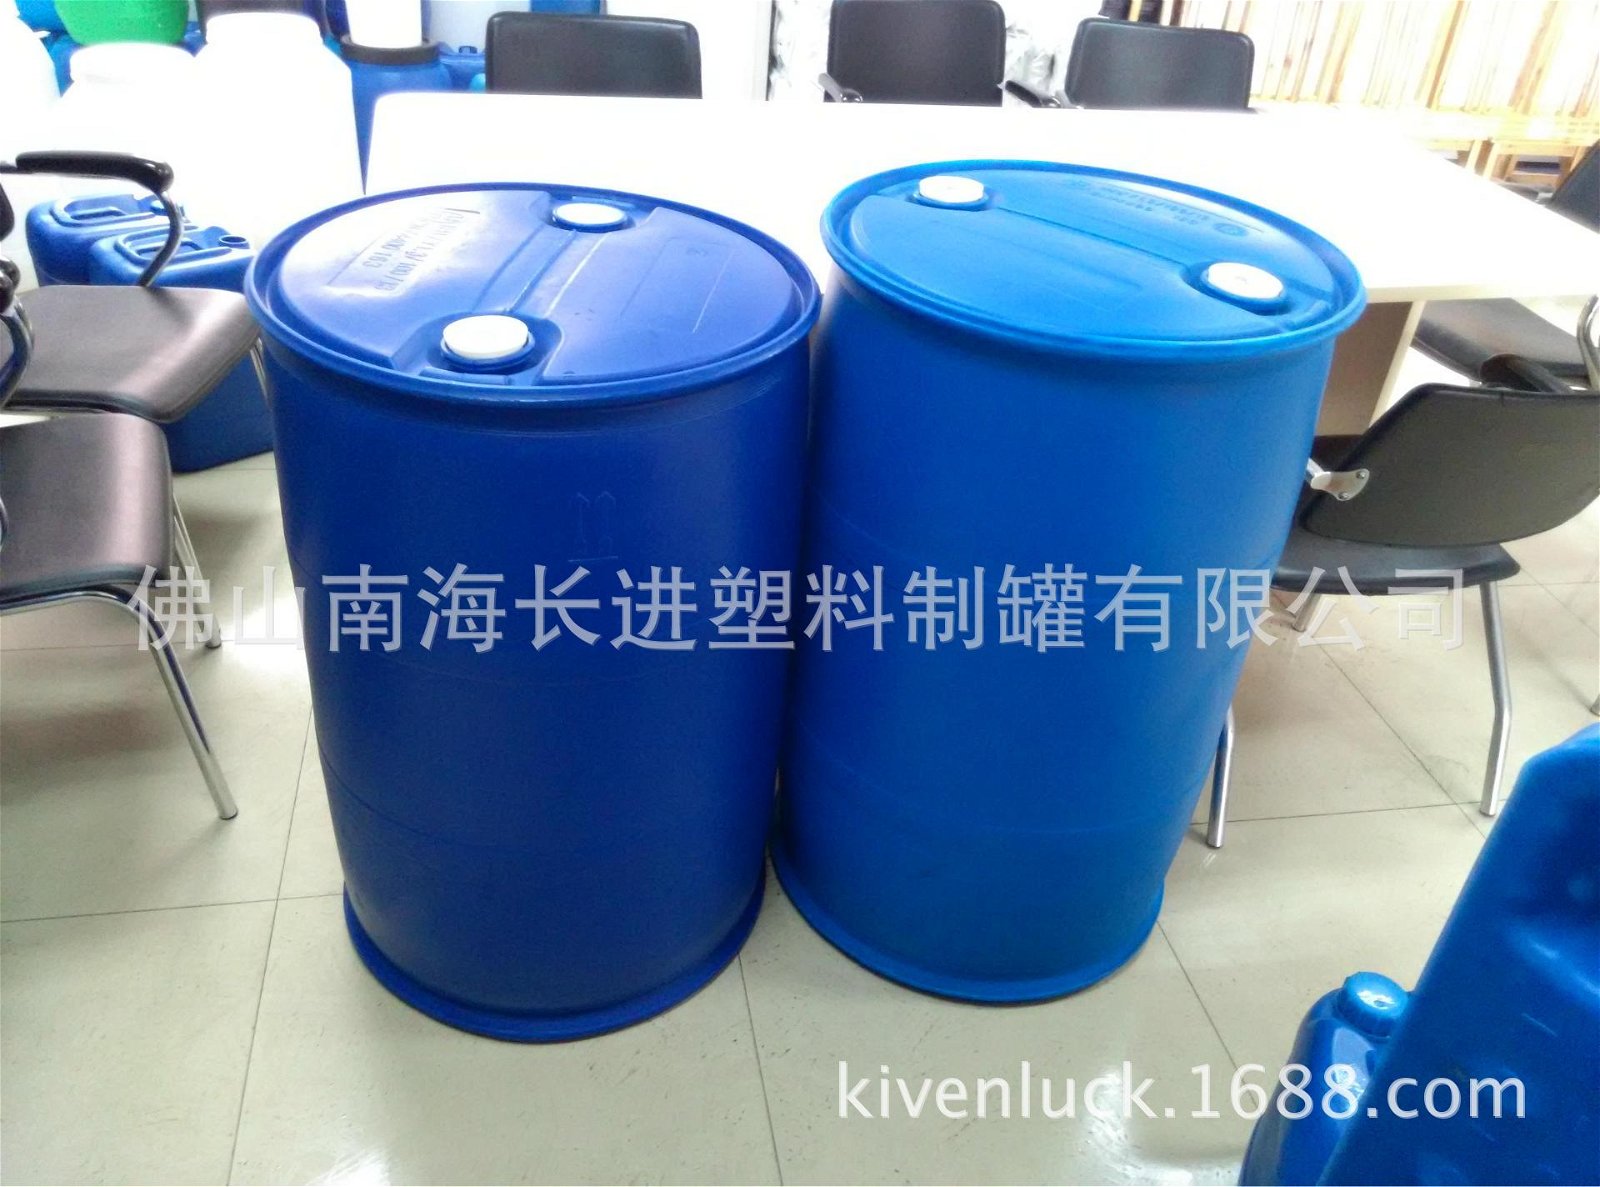 200kg blue double ring barrel 2